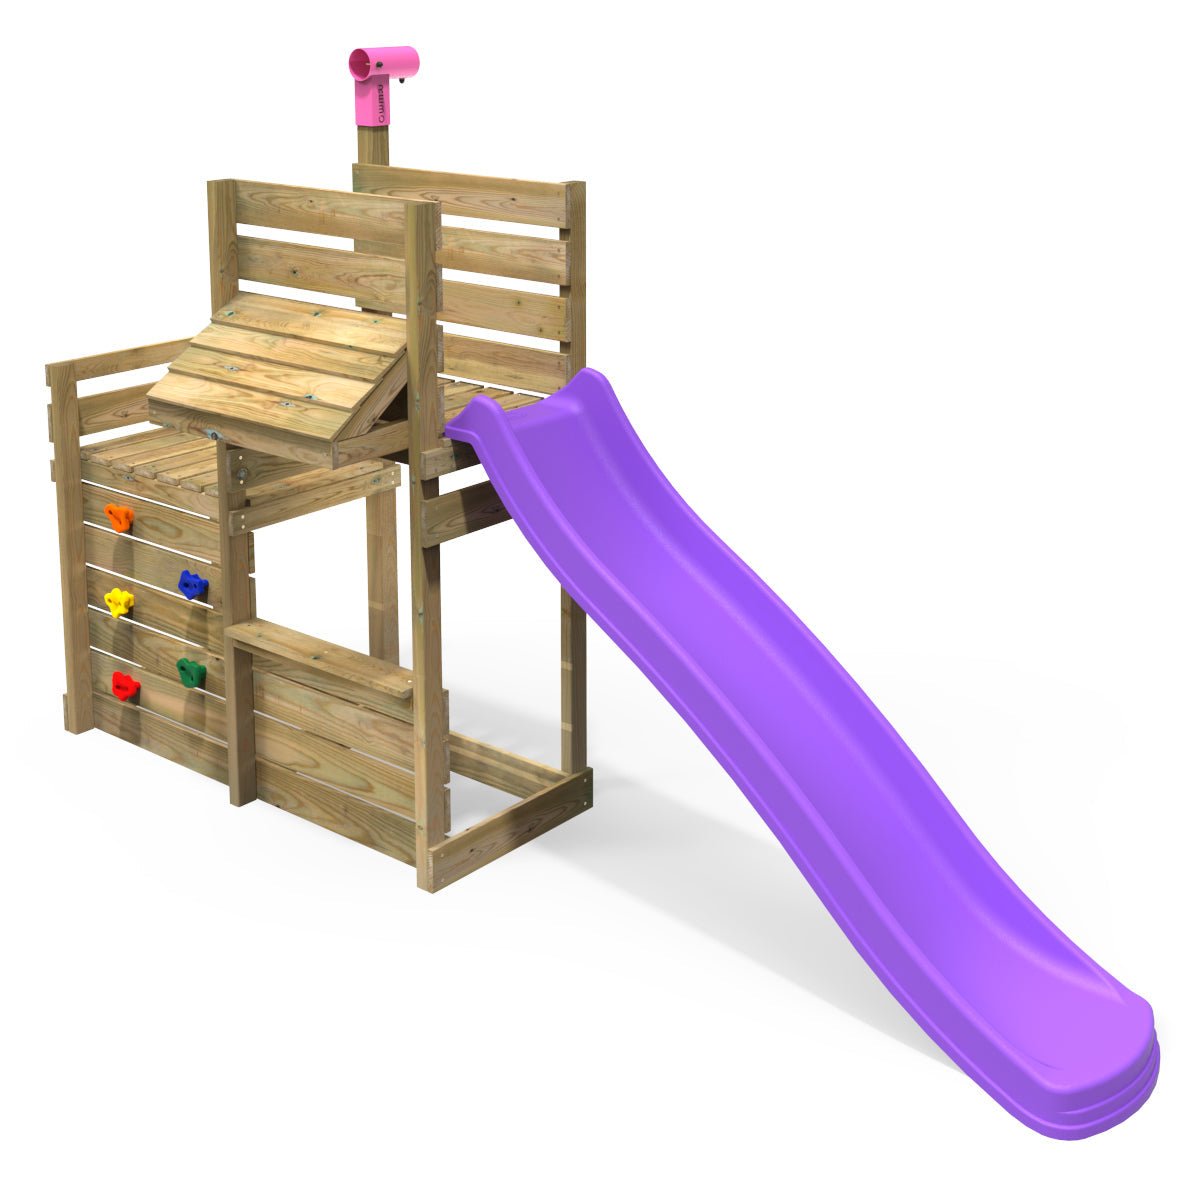 Rebo Deluxe Add On Activity Platform & 8FT Slide for Wooden Swing Sets - Purple